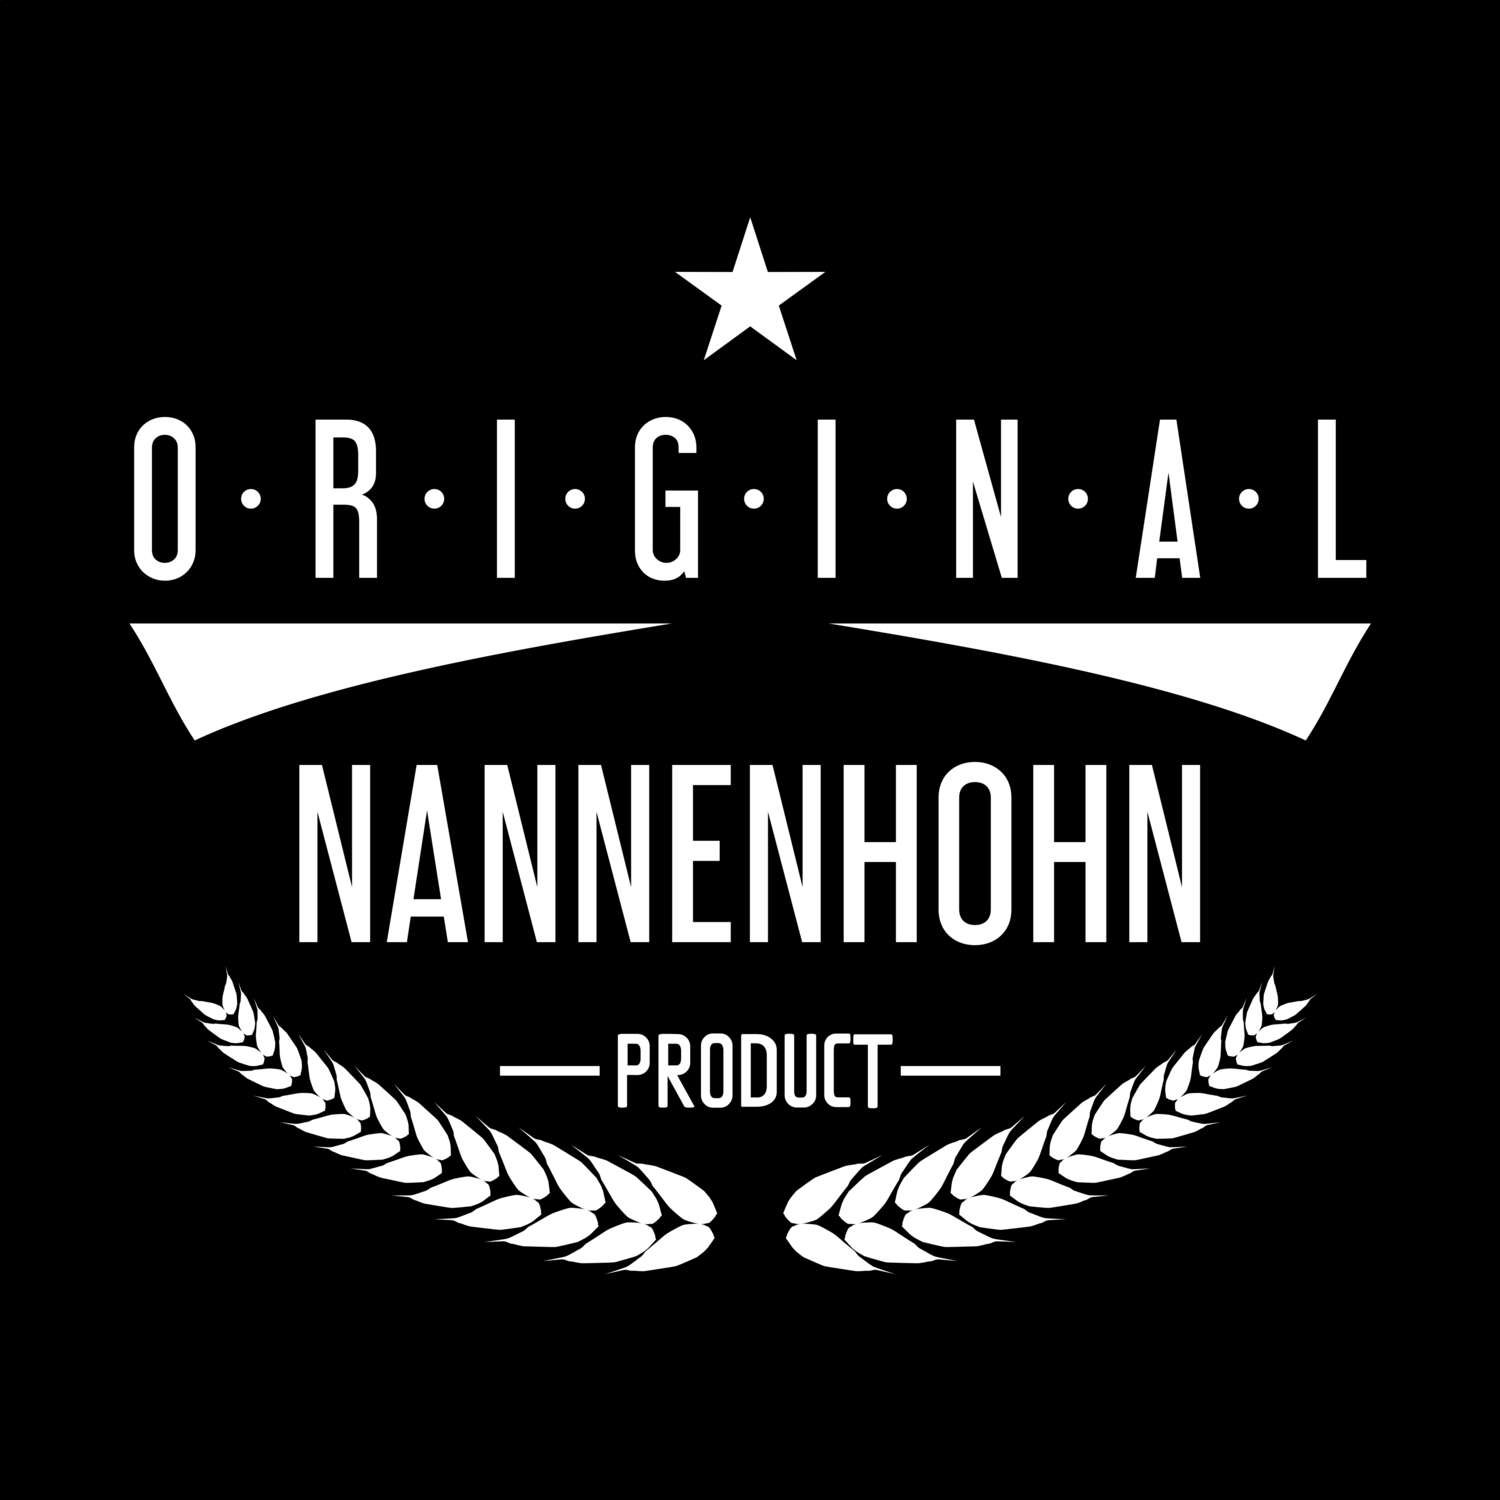 Nannenhohn T-Shirt »Original Product«